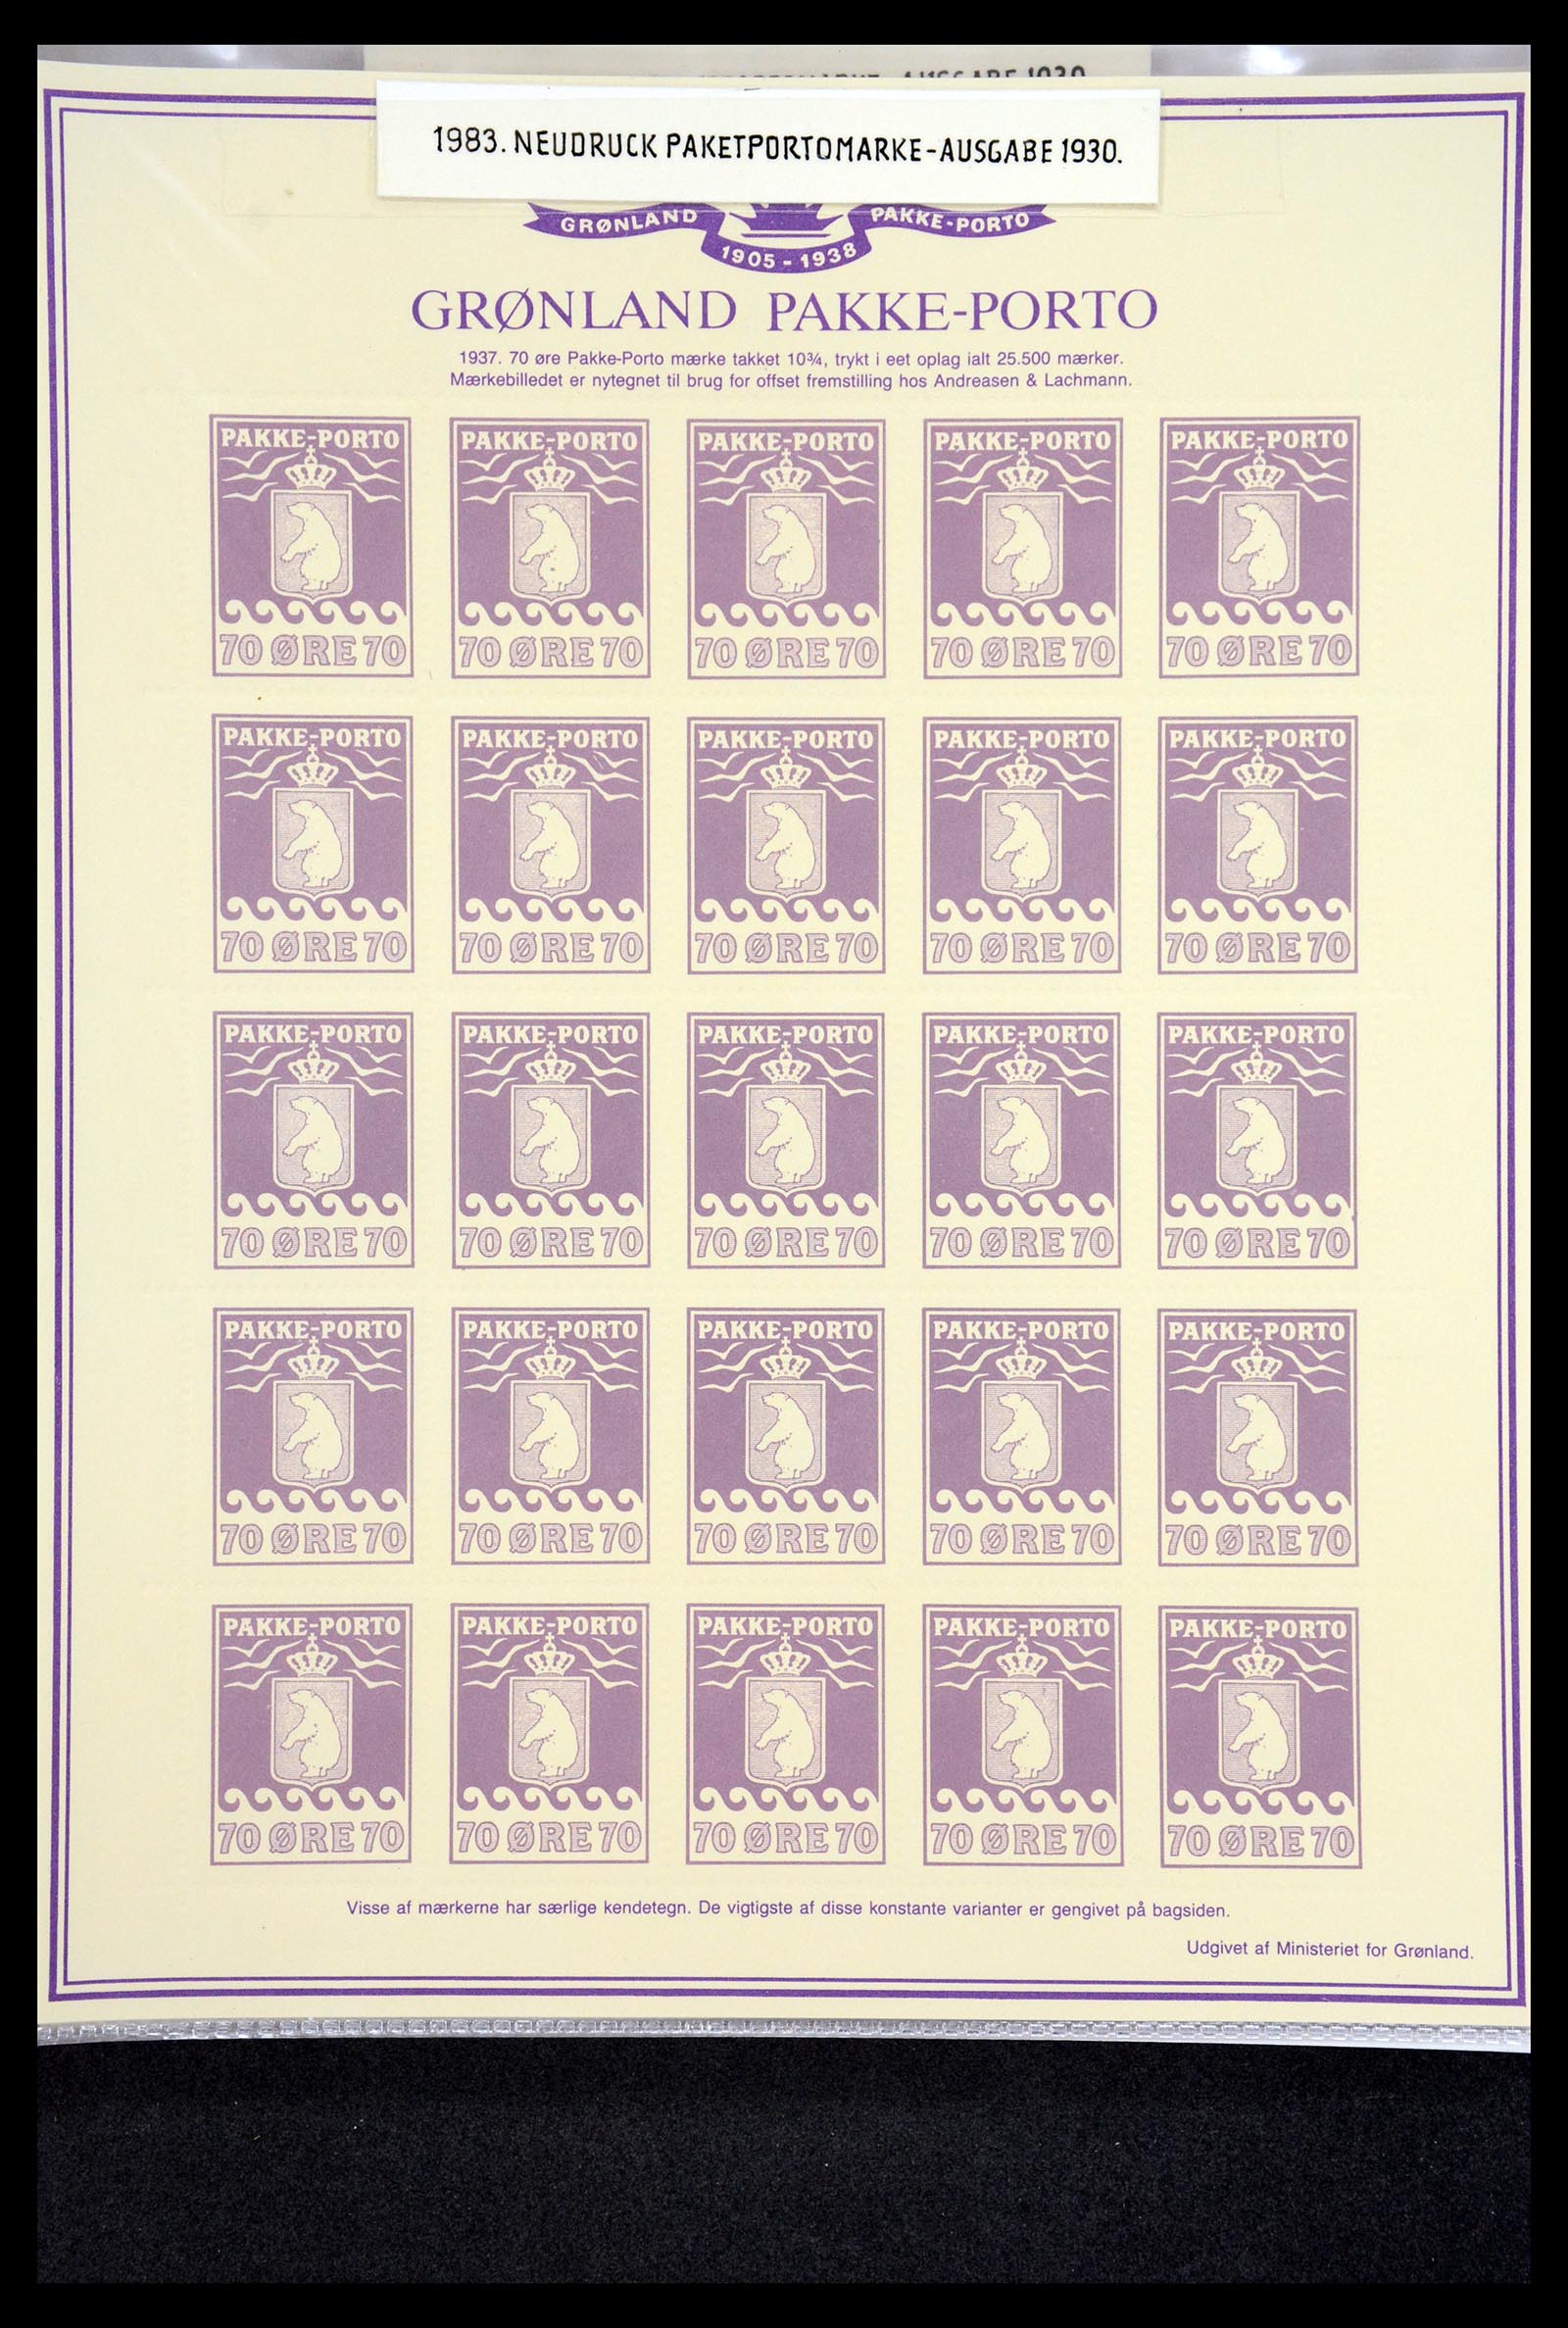 36748 018 - Stamp collection 36748 Greenland pakke-porto 1905-1930.